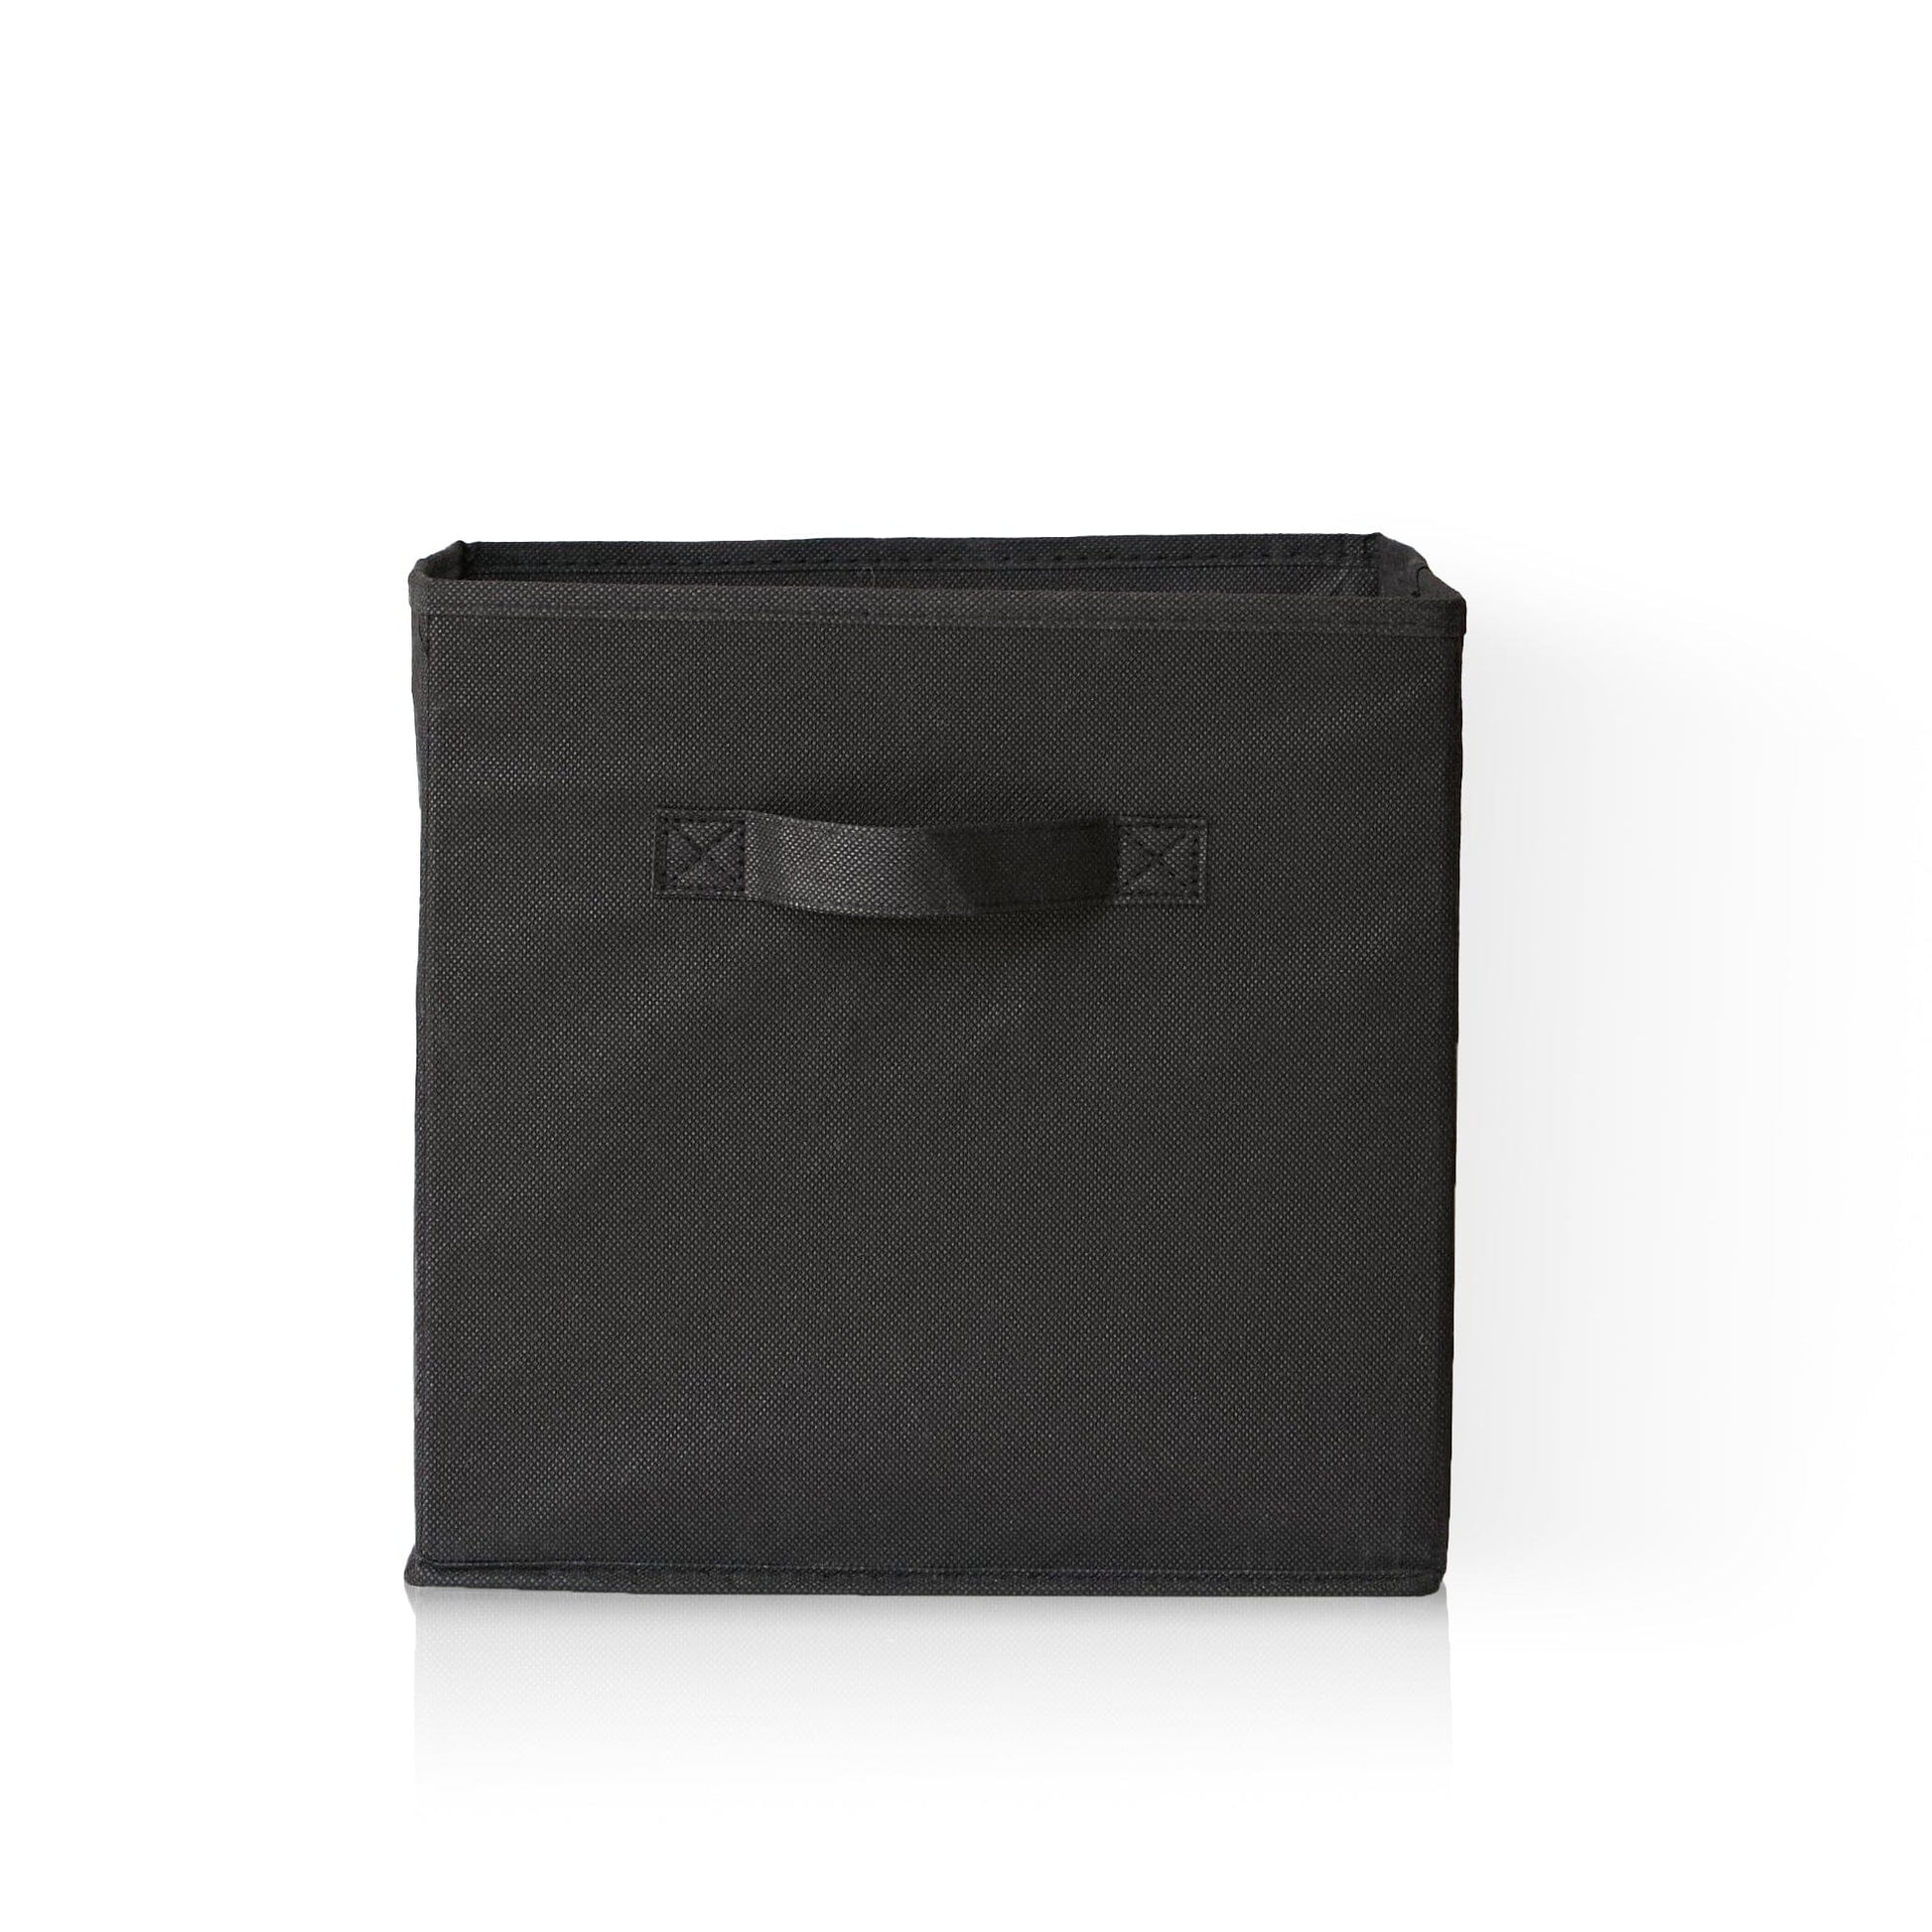 Cara-large-fabric-boxes-black-laura-james